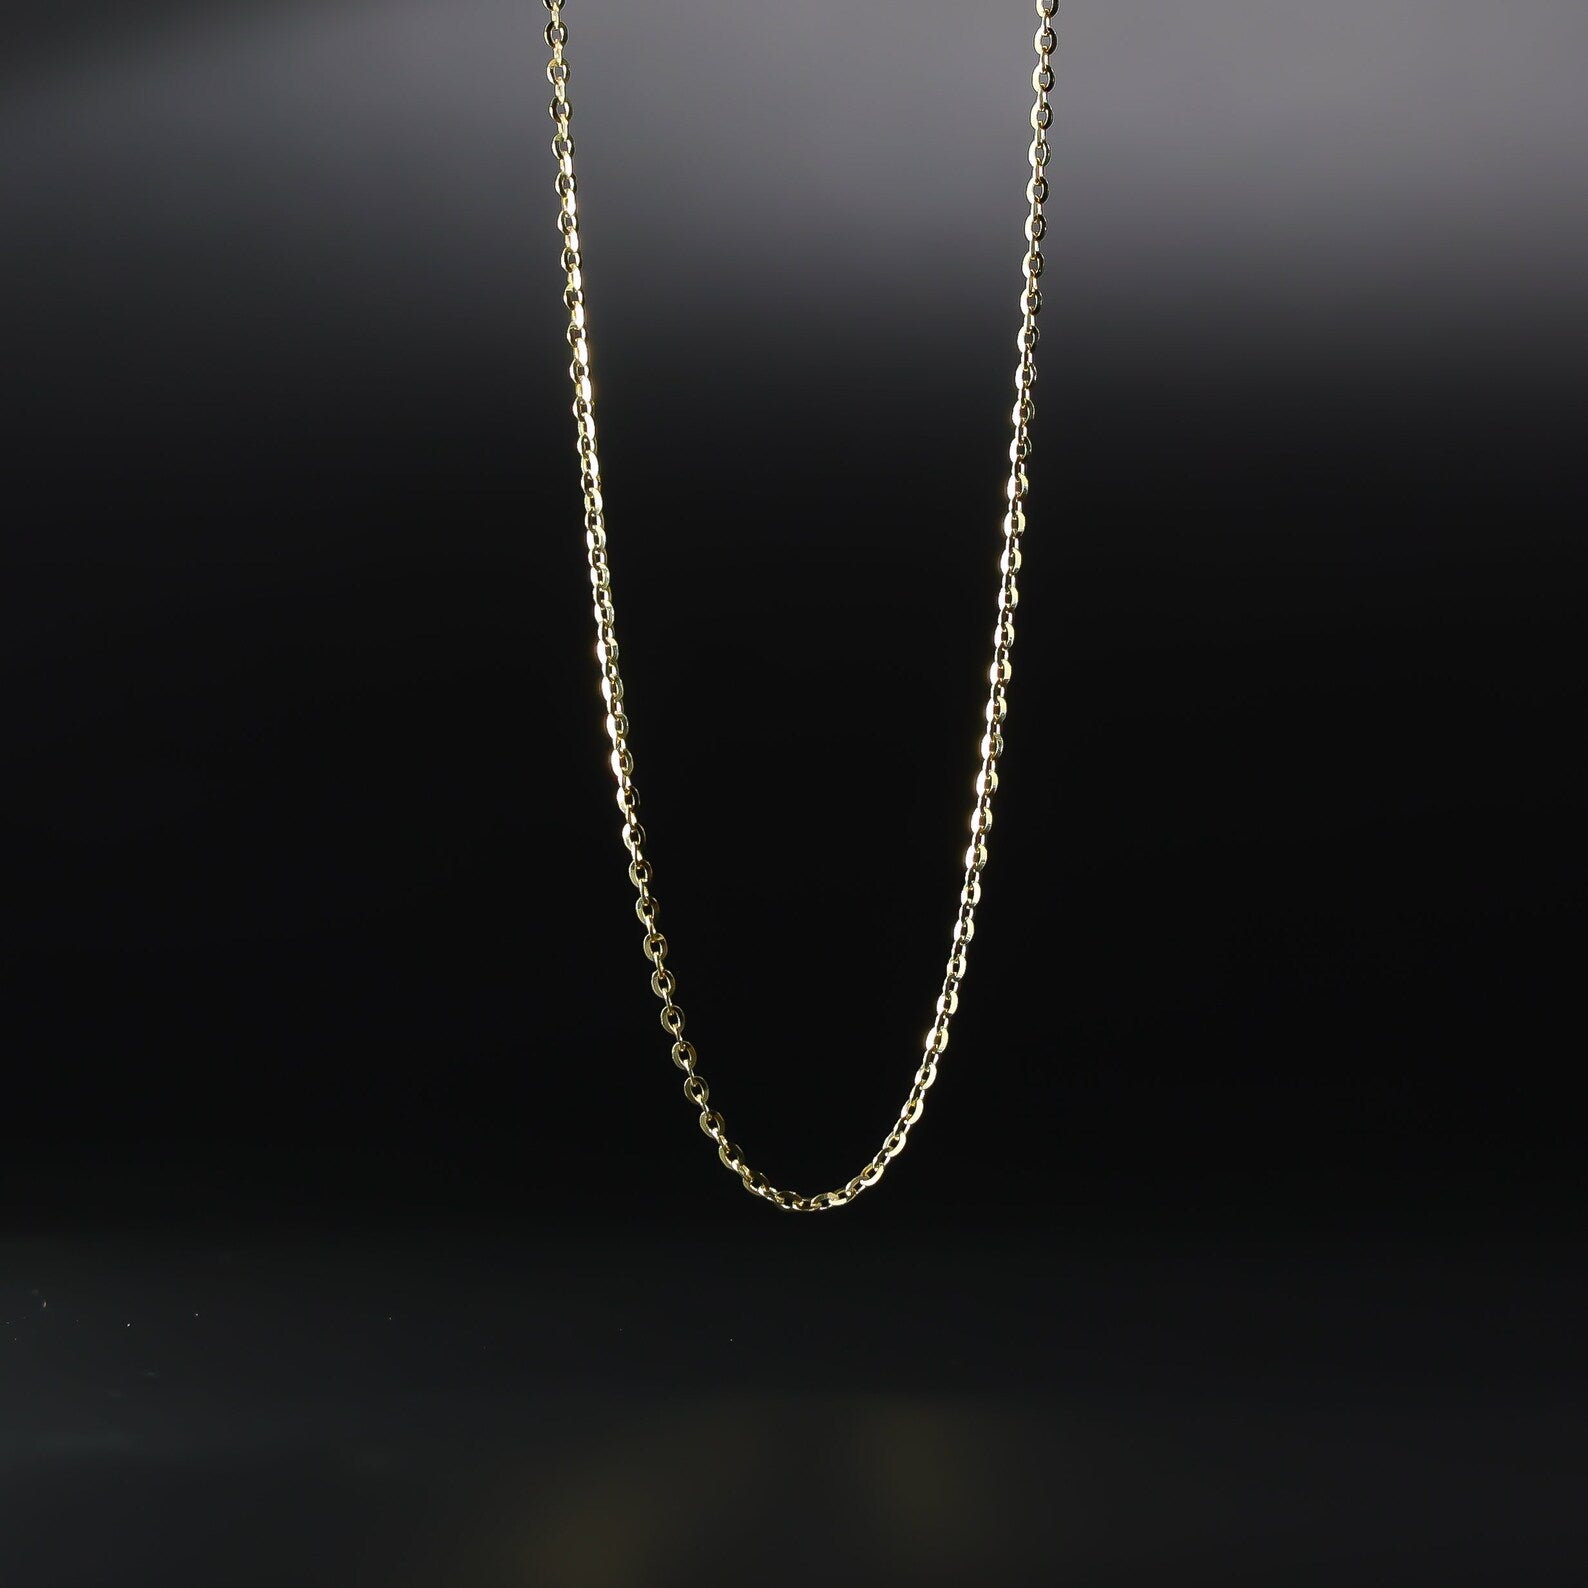 Gold Elephant Pendant Model-2338 - Charlie & Co. Jewelry